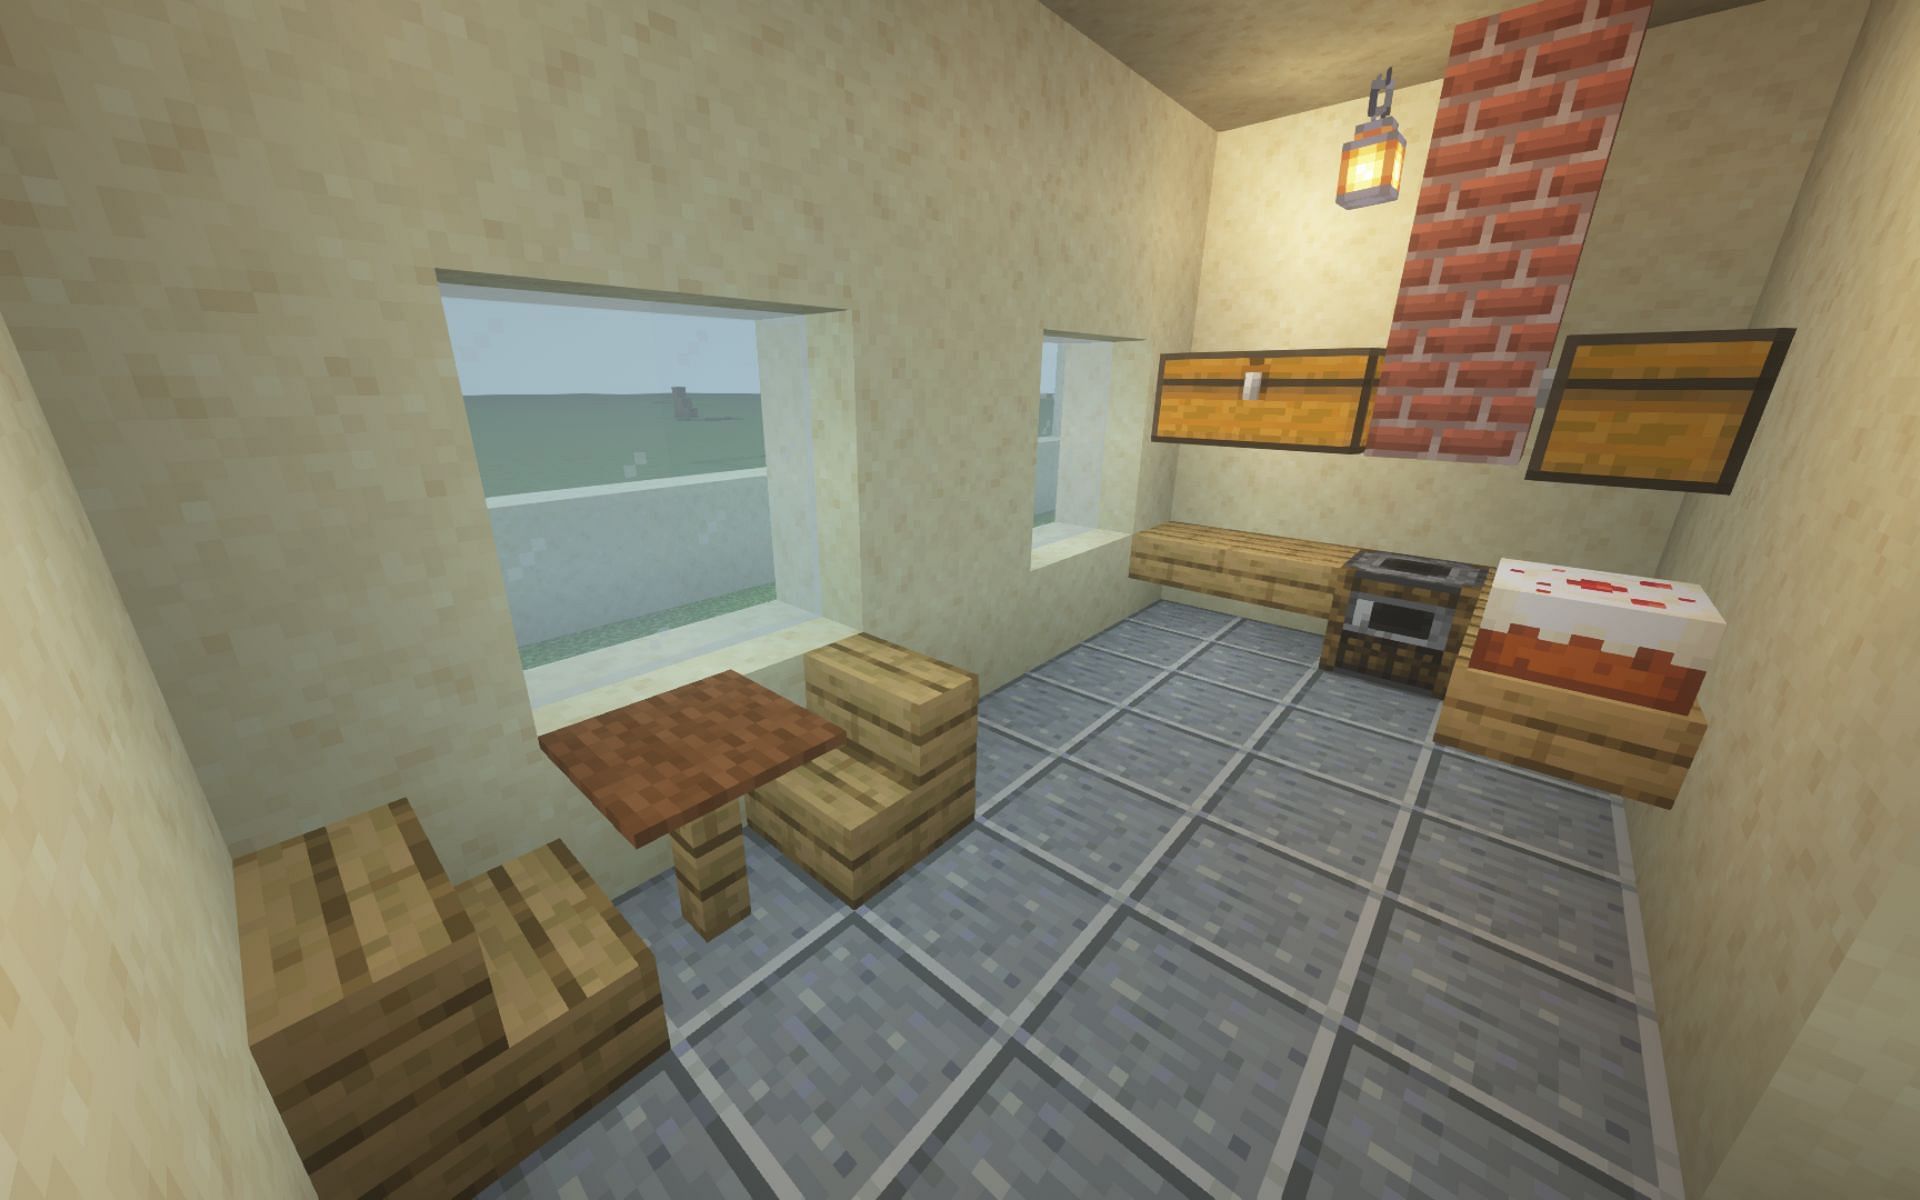 A simple kitchen (Image via Minecraft)